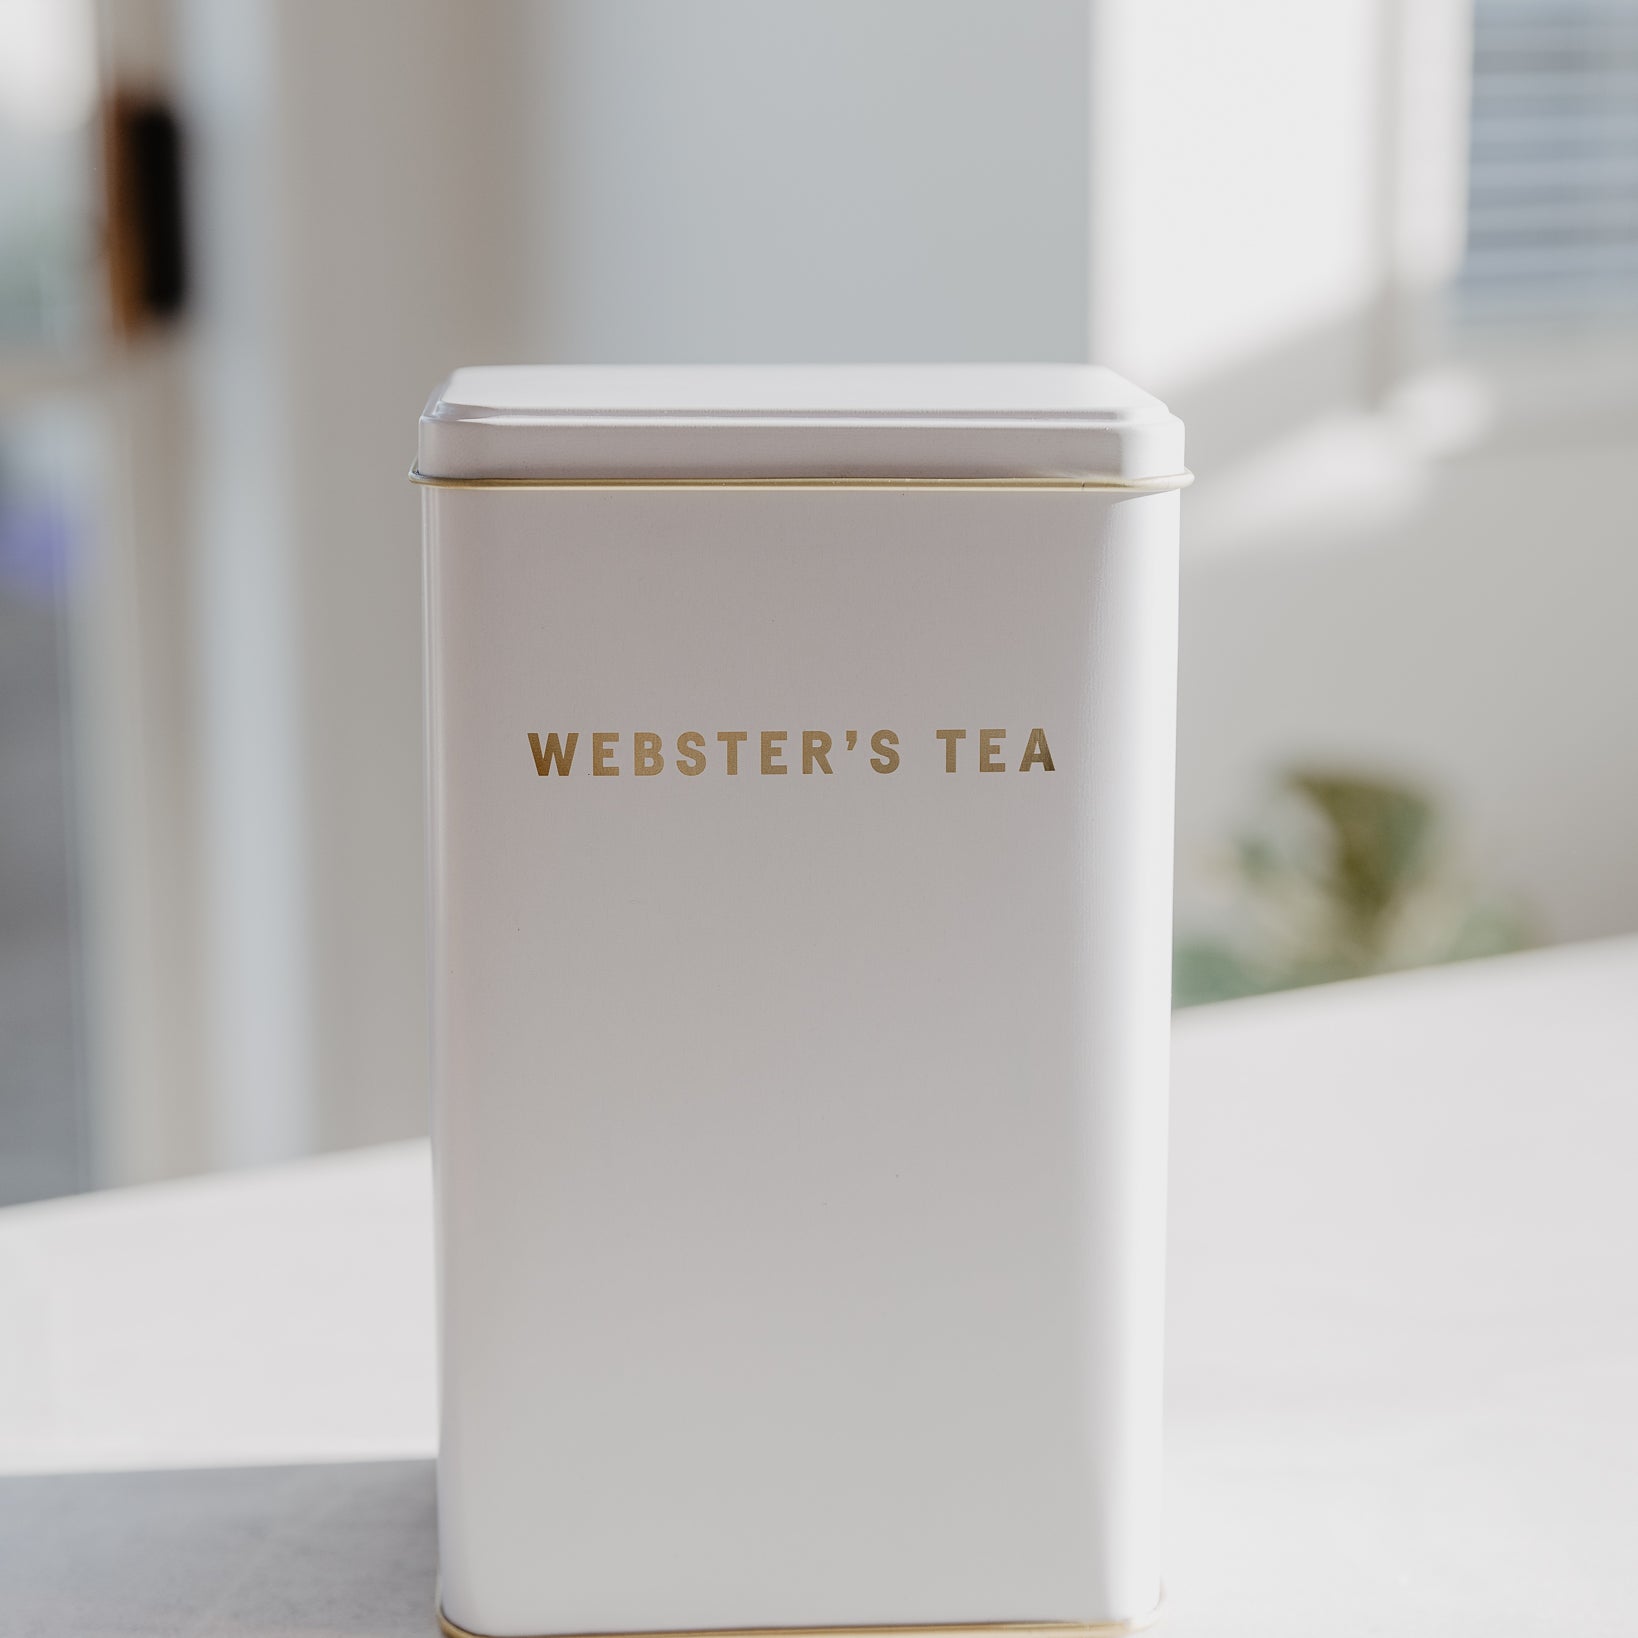 The Proper Way to Store Tea